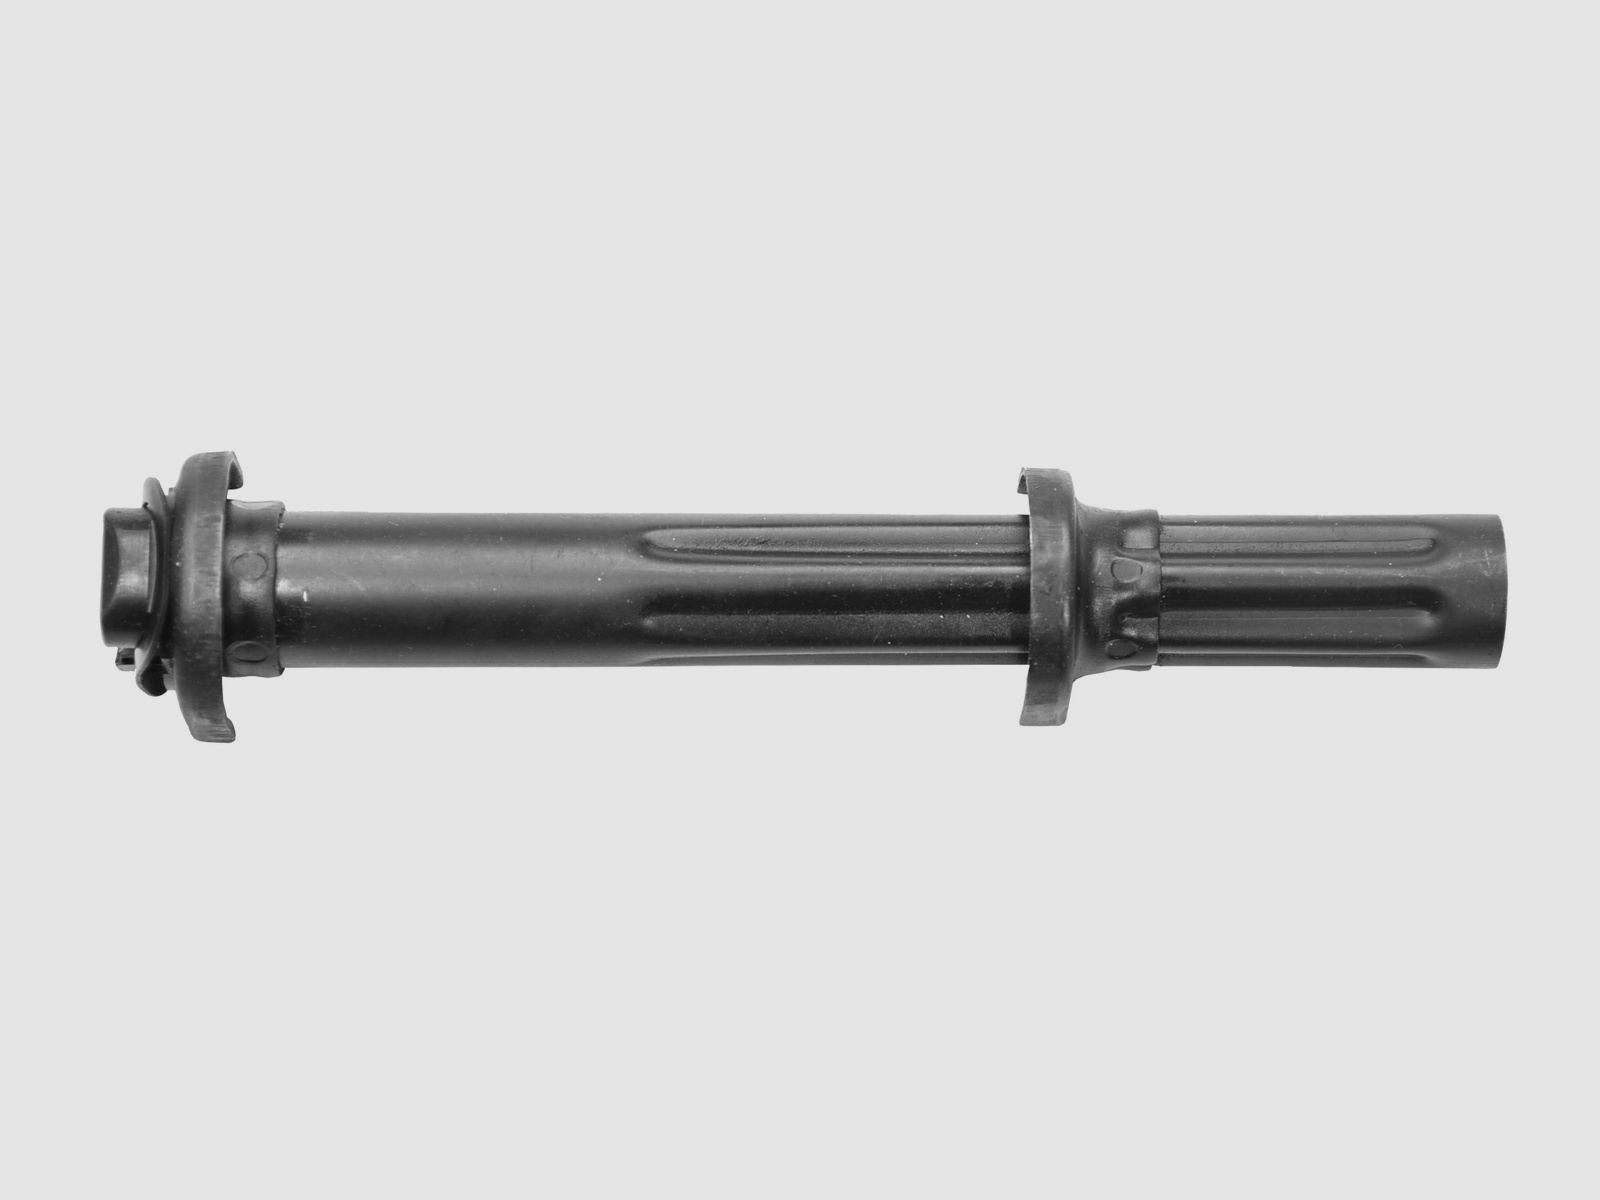 AK47M CO2 4,5mm Vers.3 AKM SCHWARZ Yunker mit DDR Schaft